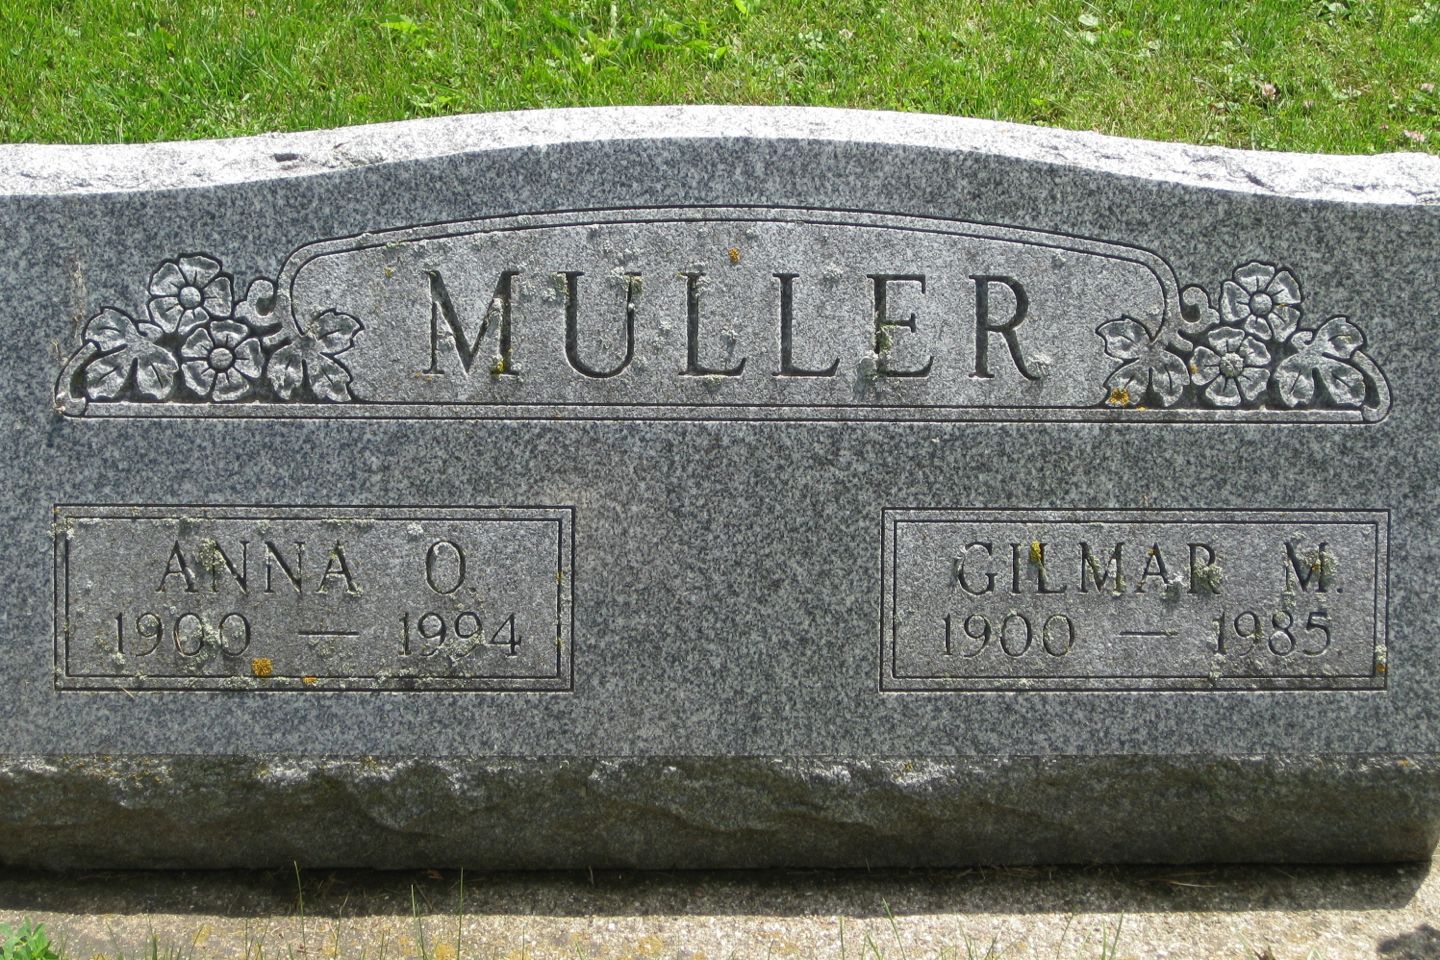 Gilmar, 1900-85, & Anna O. Muller, 1909-94